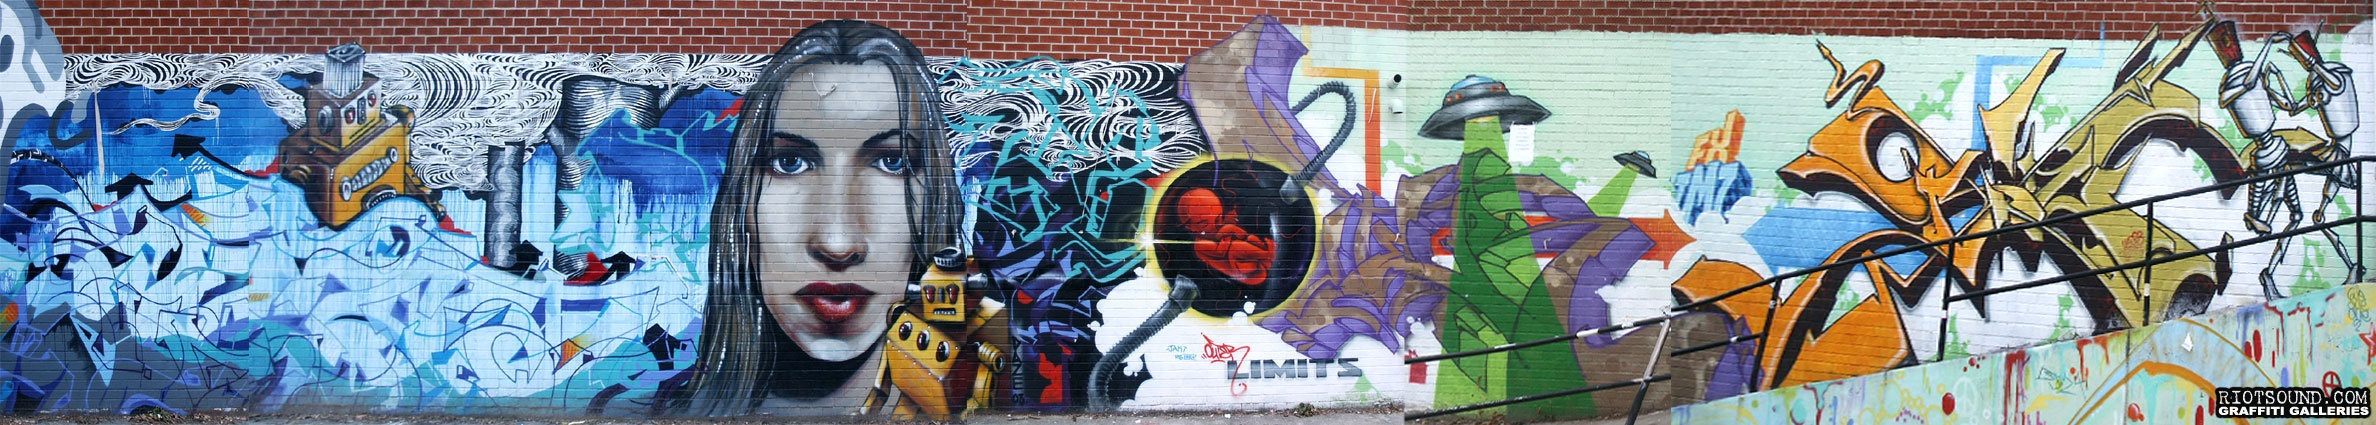 Grafitti149